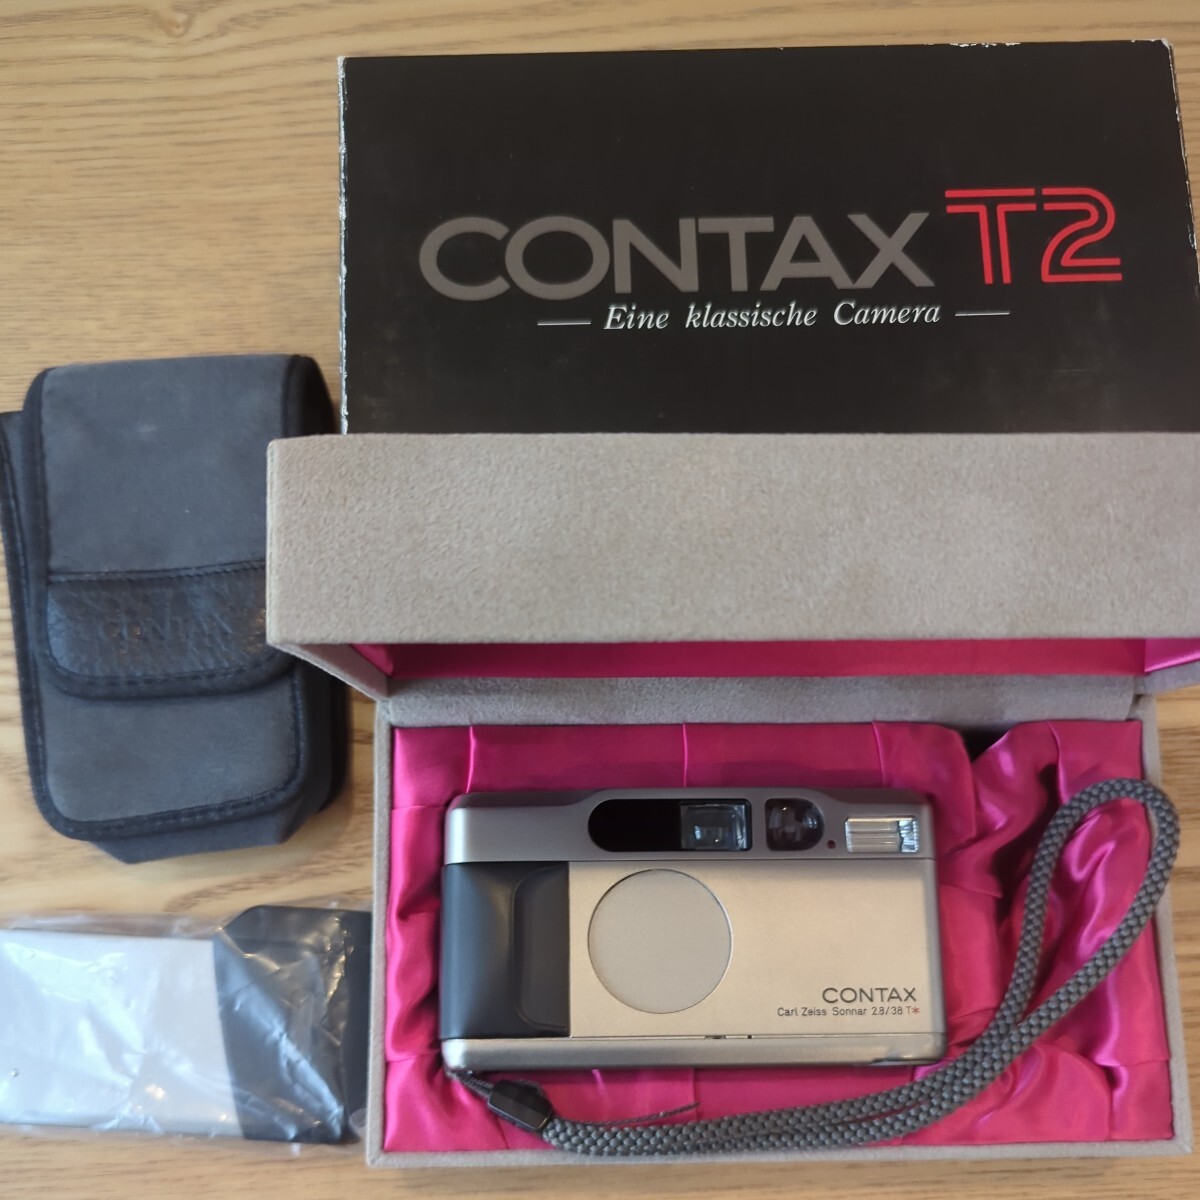 Contax T2 box attaching 